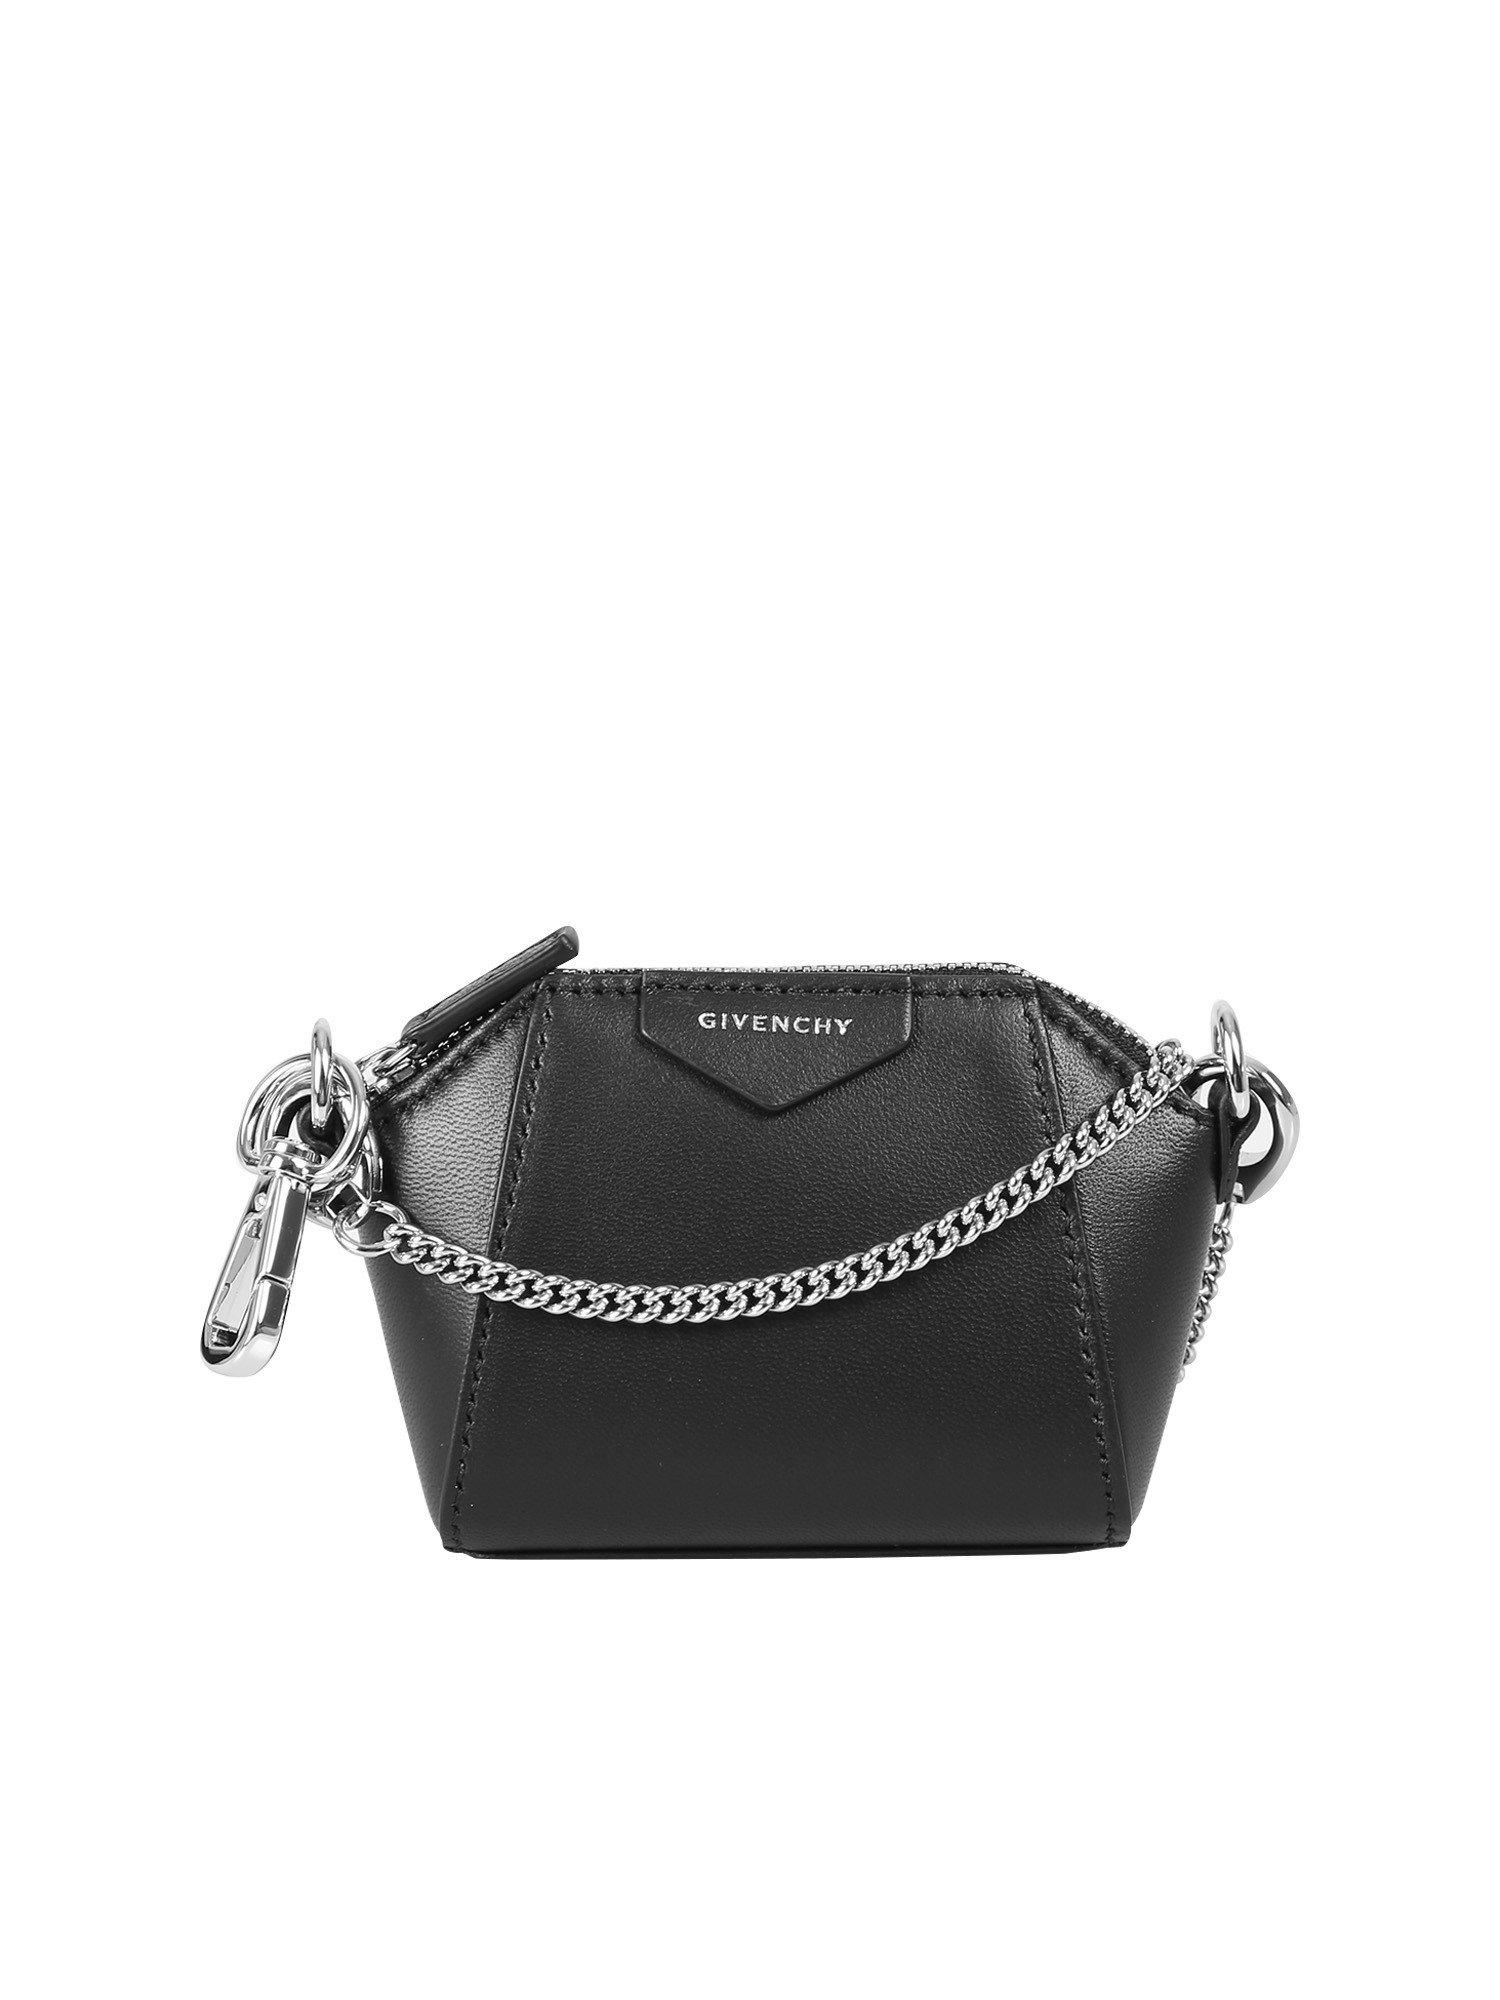 Givenchy Leather Baby Antigona Crossbody Bag in Black - Lyst